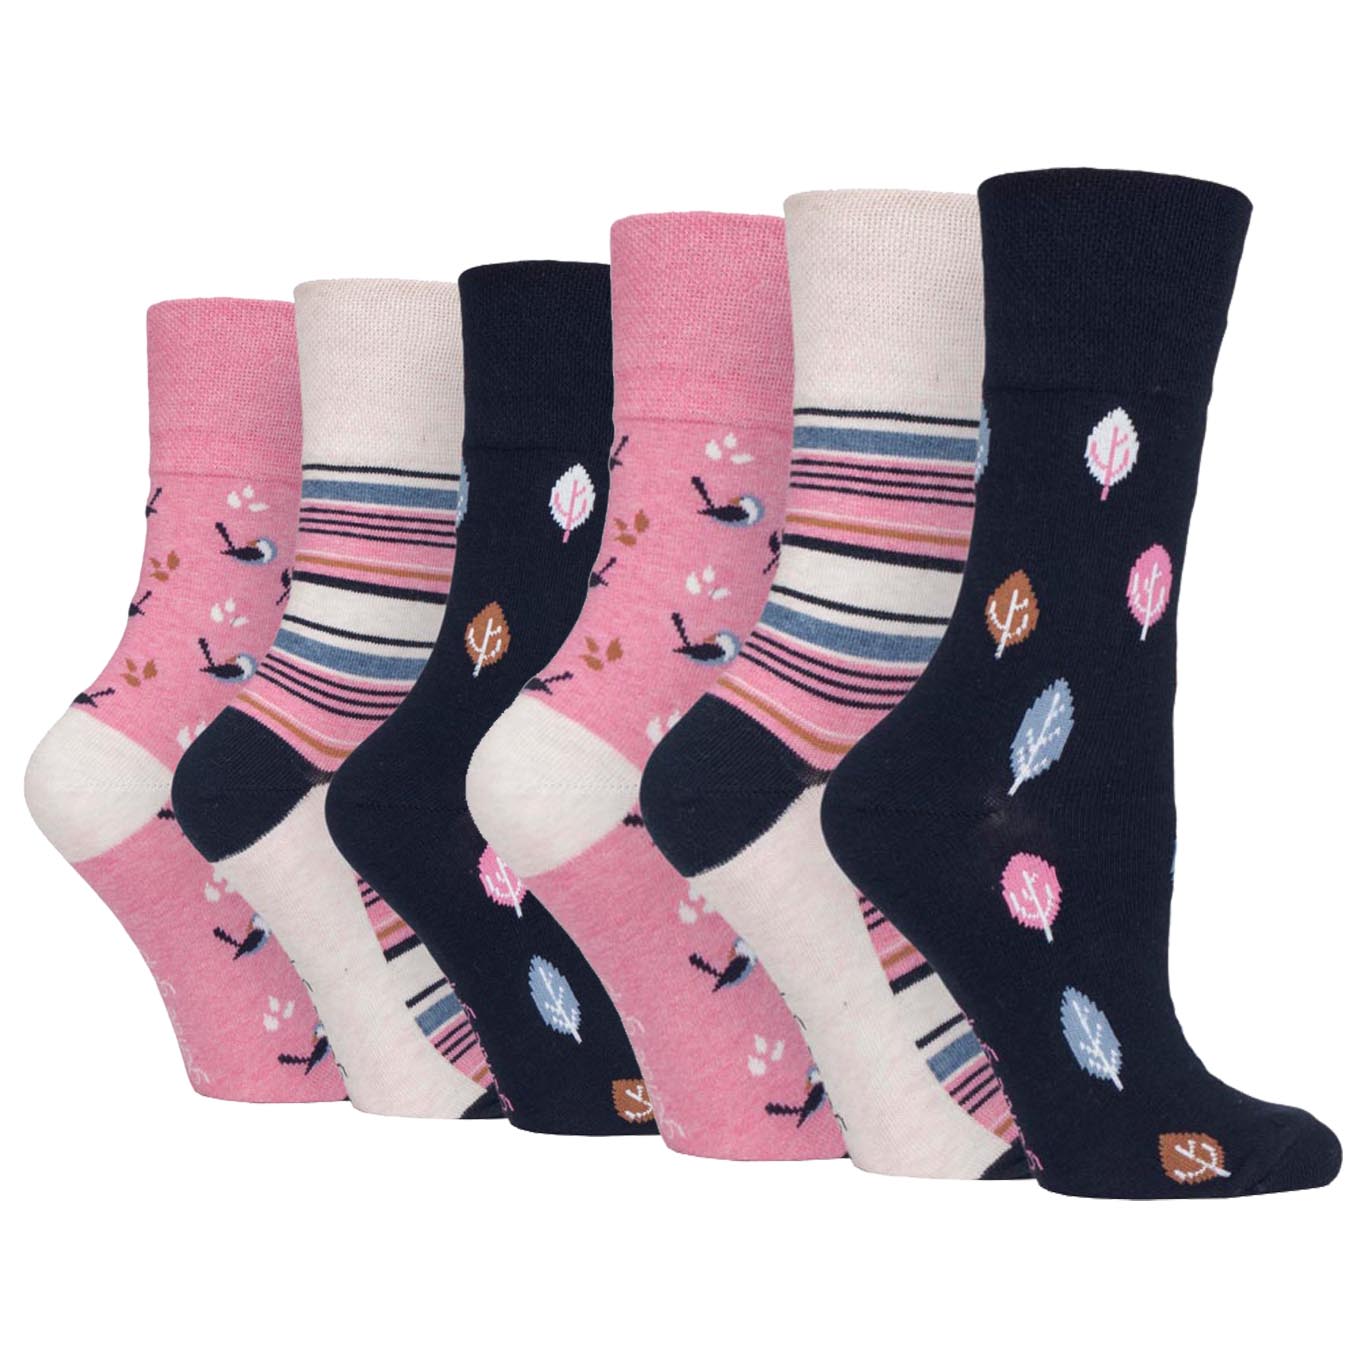 6 Pairs Ladies Gentle Grip Cotton Socks Fun Feet Woodland Walk Navy